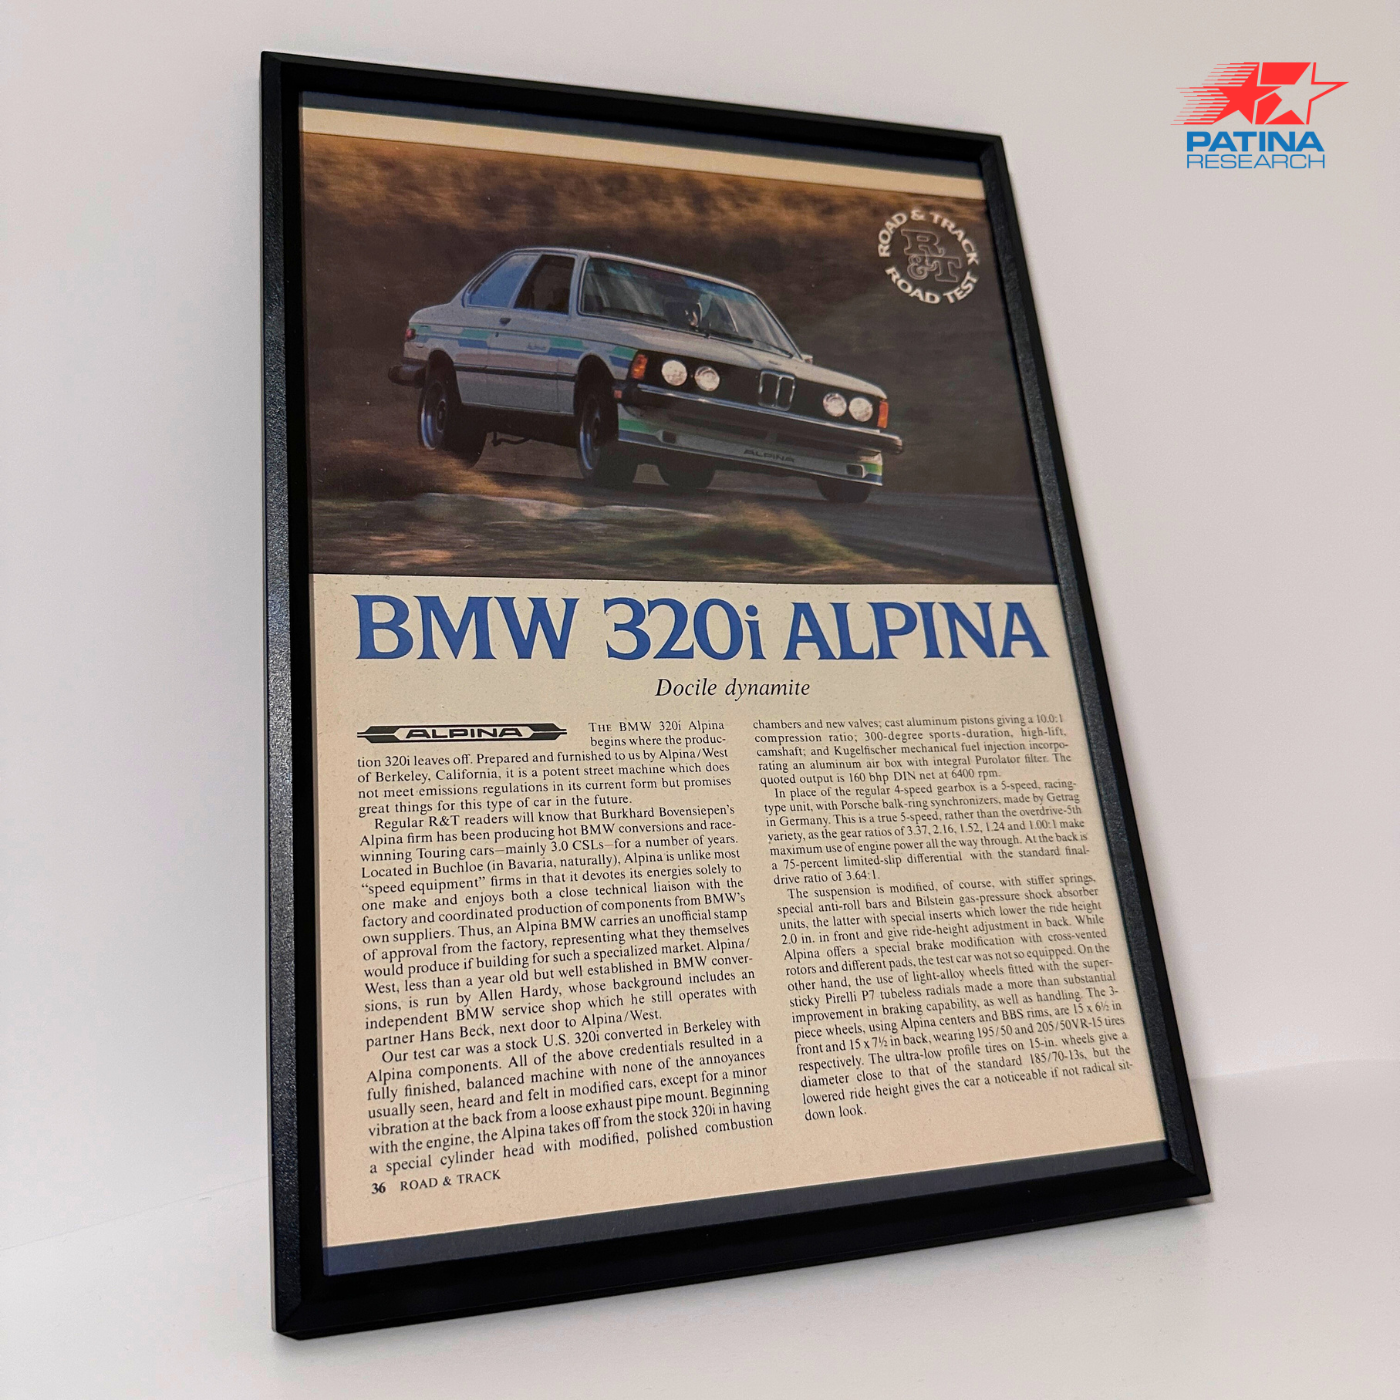 BMW 320i Alpina framed ad